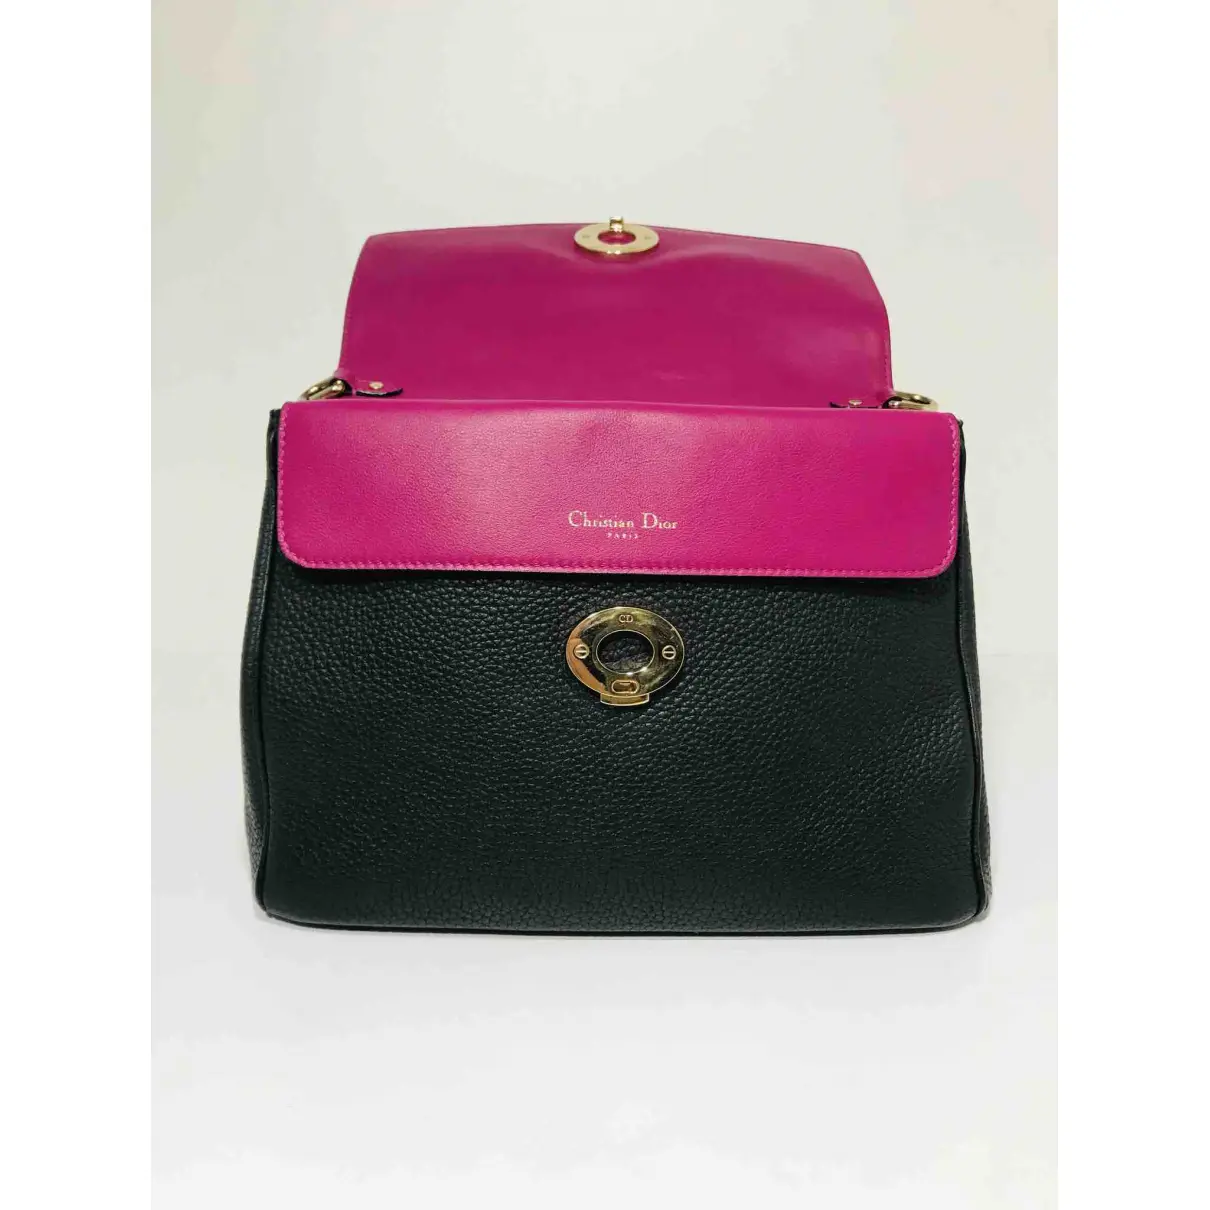 Be Dior leather handbag Dior